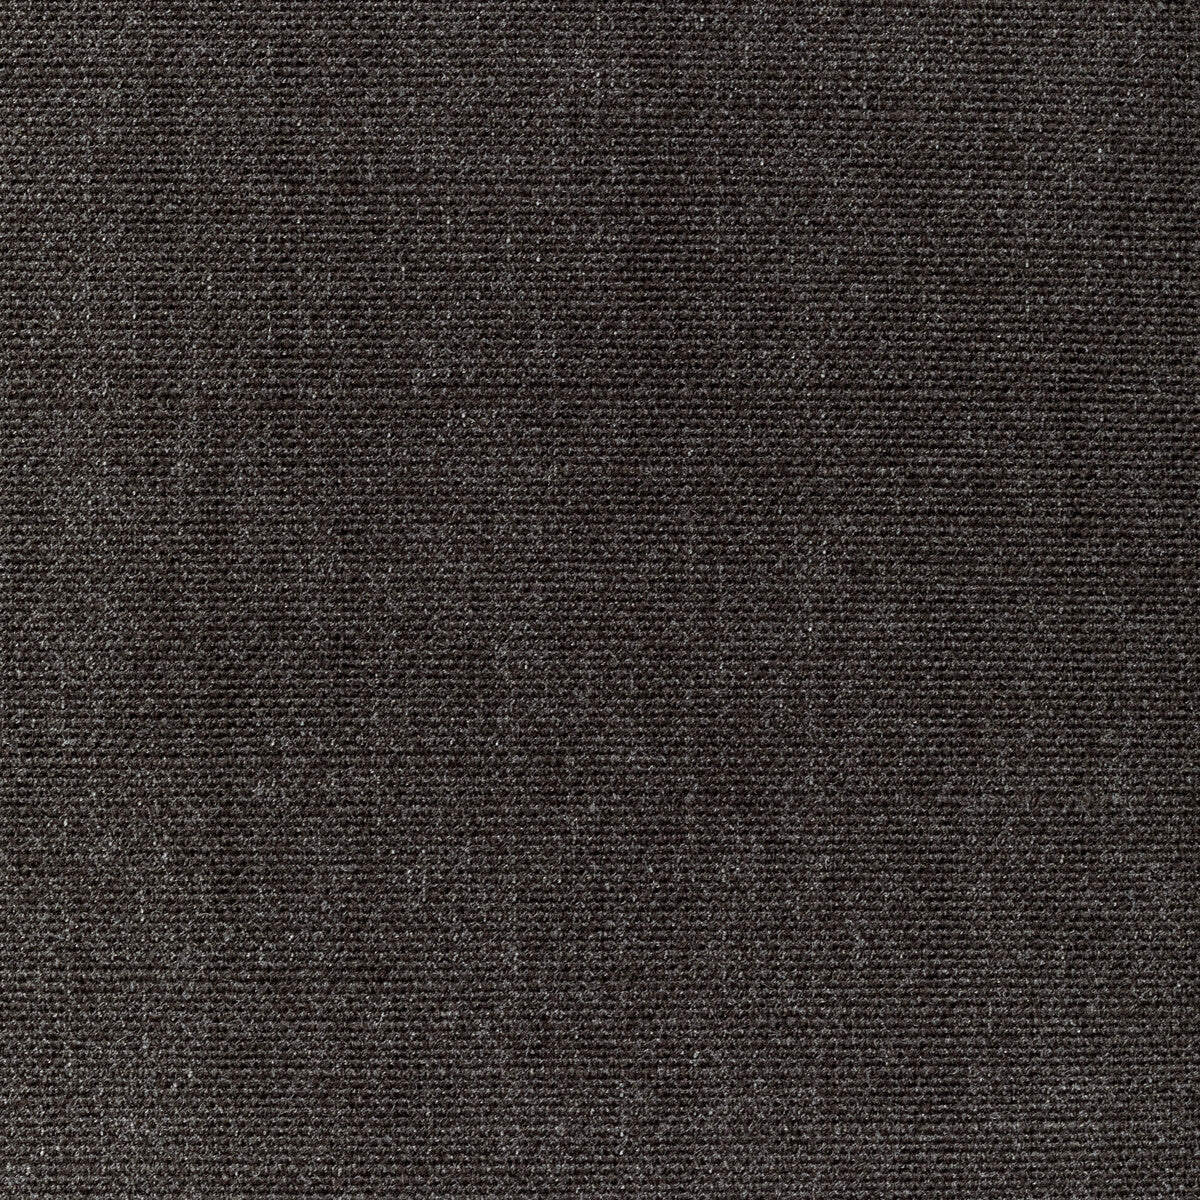 Kravet Smart fabric in 36112-2121 color - pattern 36112.2121.0 - by Kravet Smart in the Performance Kravetarmor collection